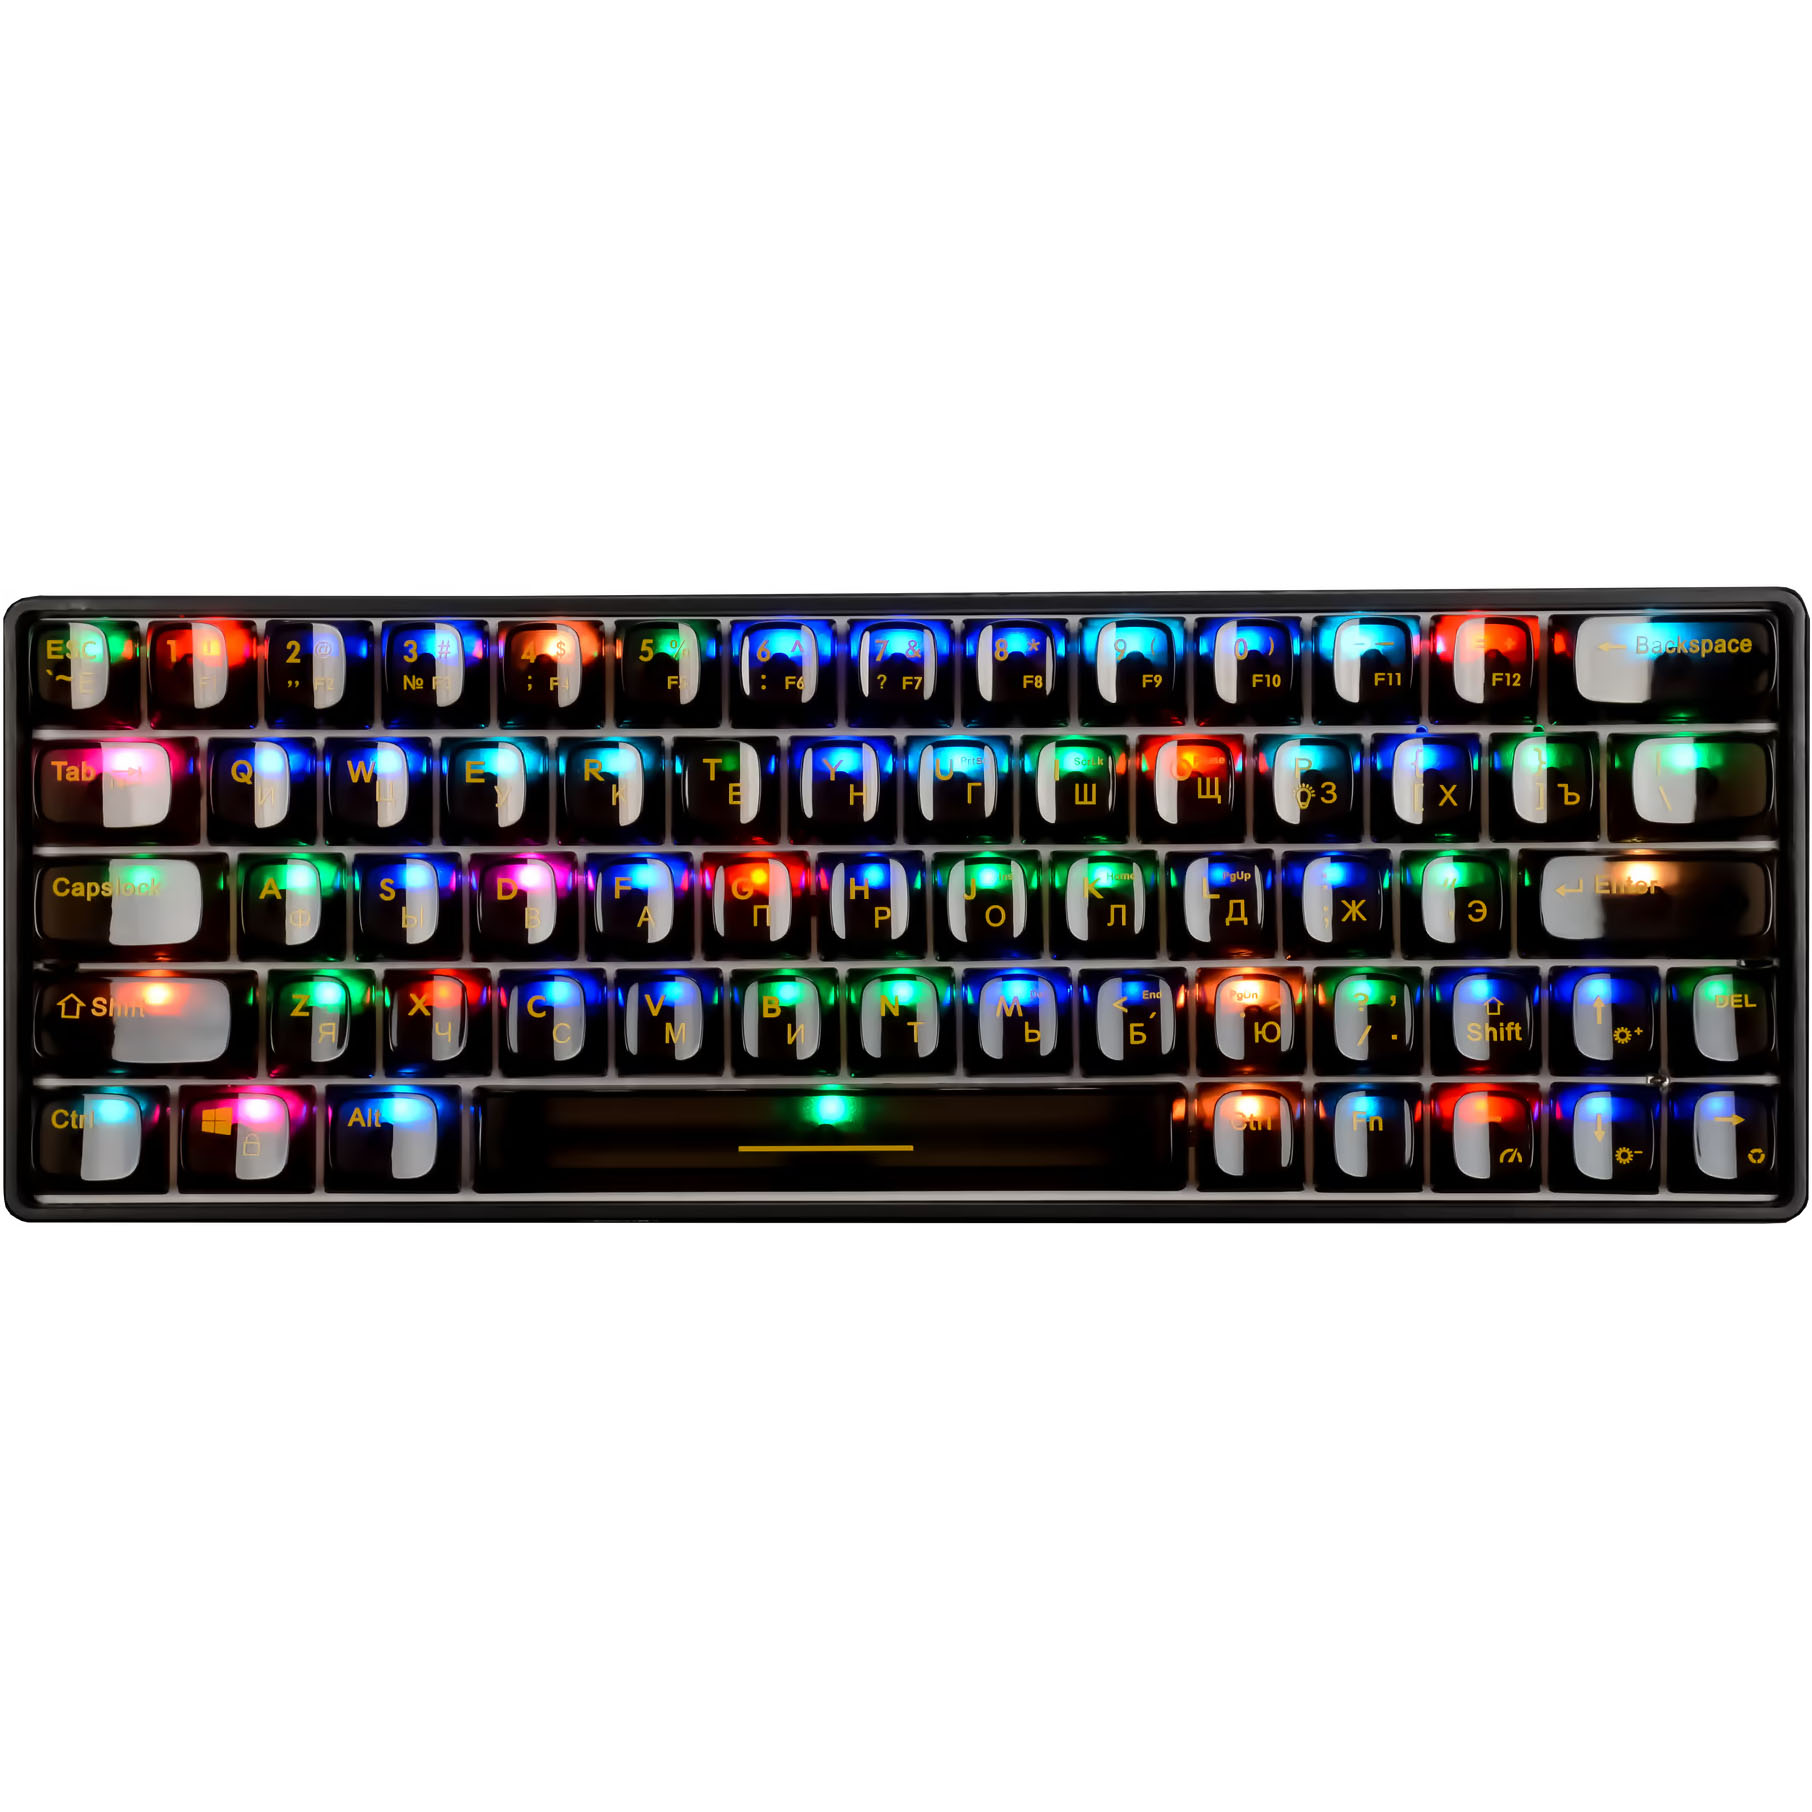 Клавиатура Jet.A Panteon T1 Pro CK BS черный pbt keycaps commond and option keys dye sublimation mx keyboard keycaps